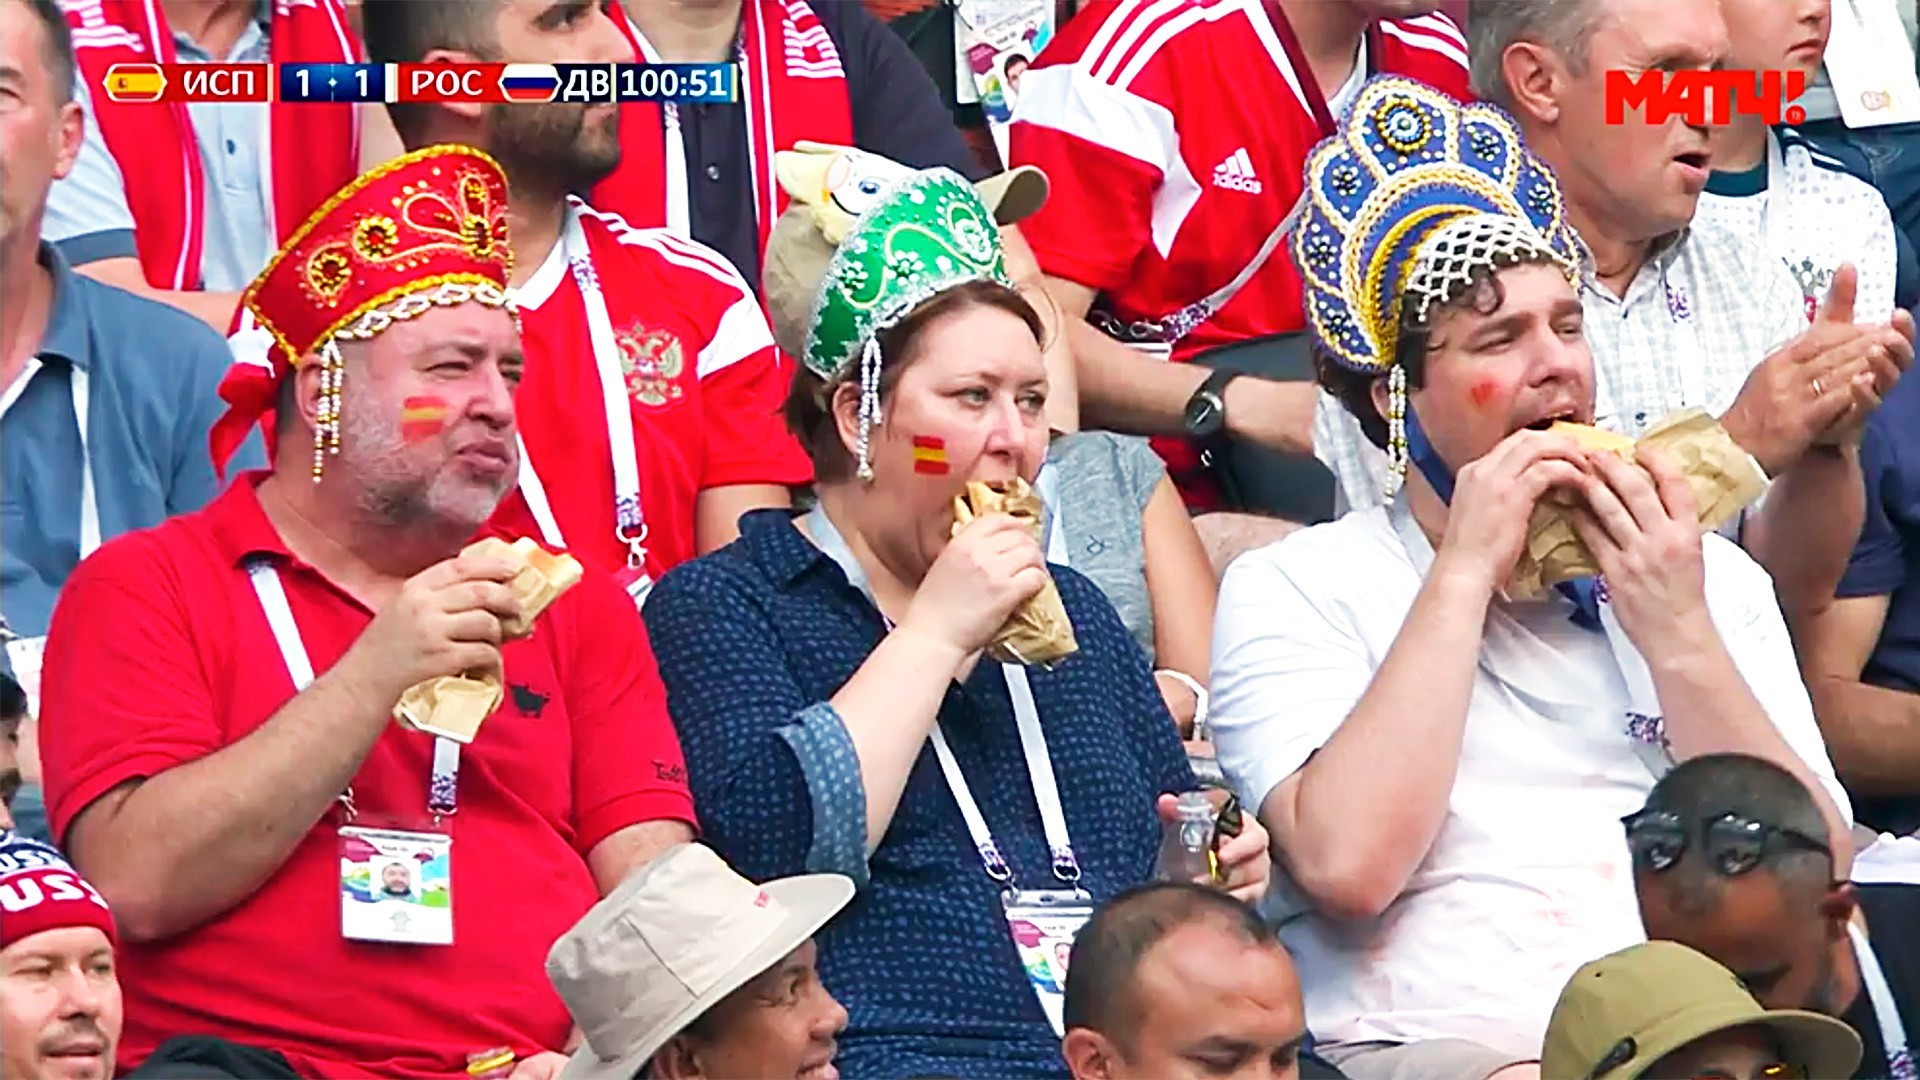 Ruski navijači s kokošniki, (nekakšnimi) ruskimi narodnimi pokrivali.